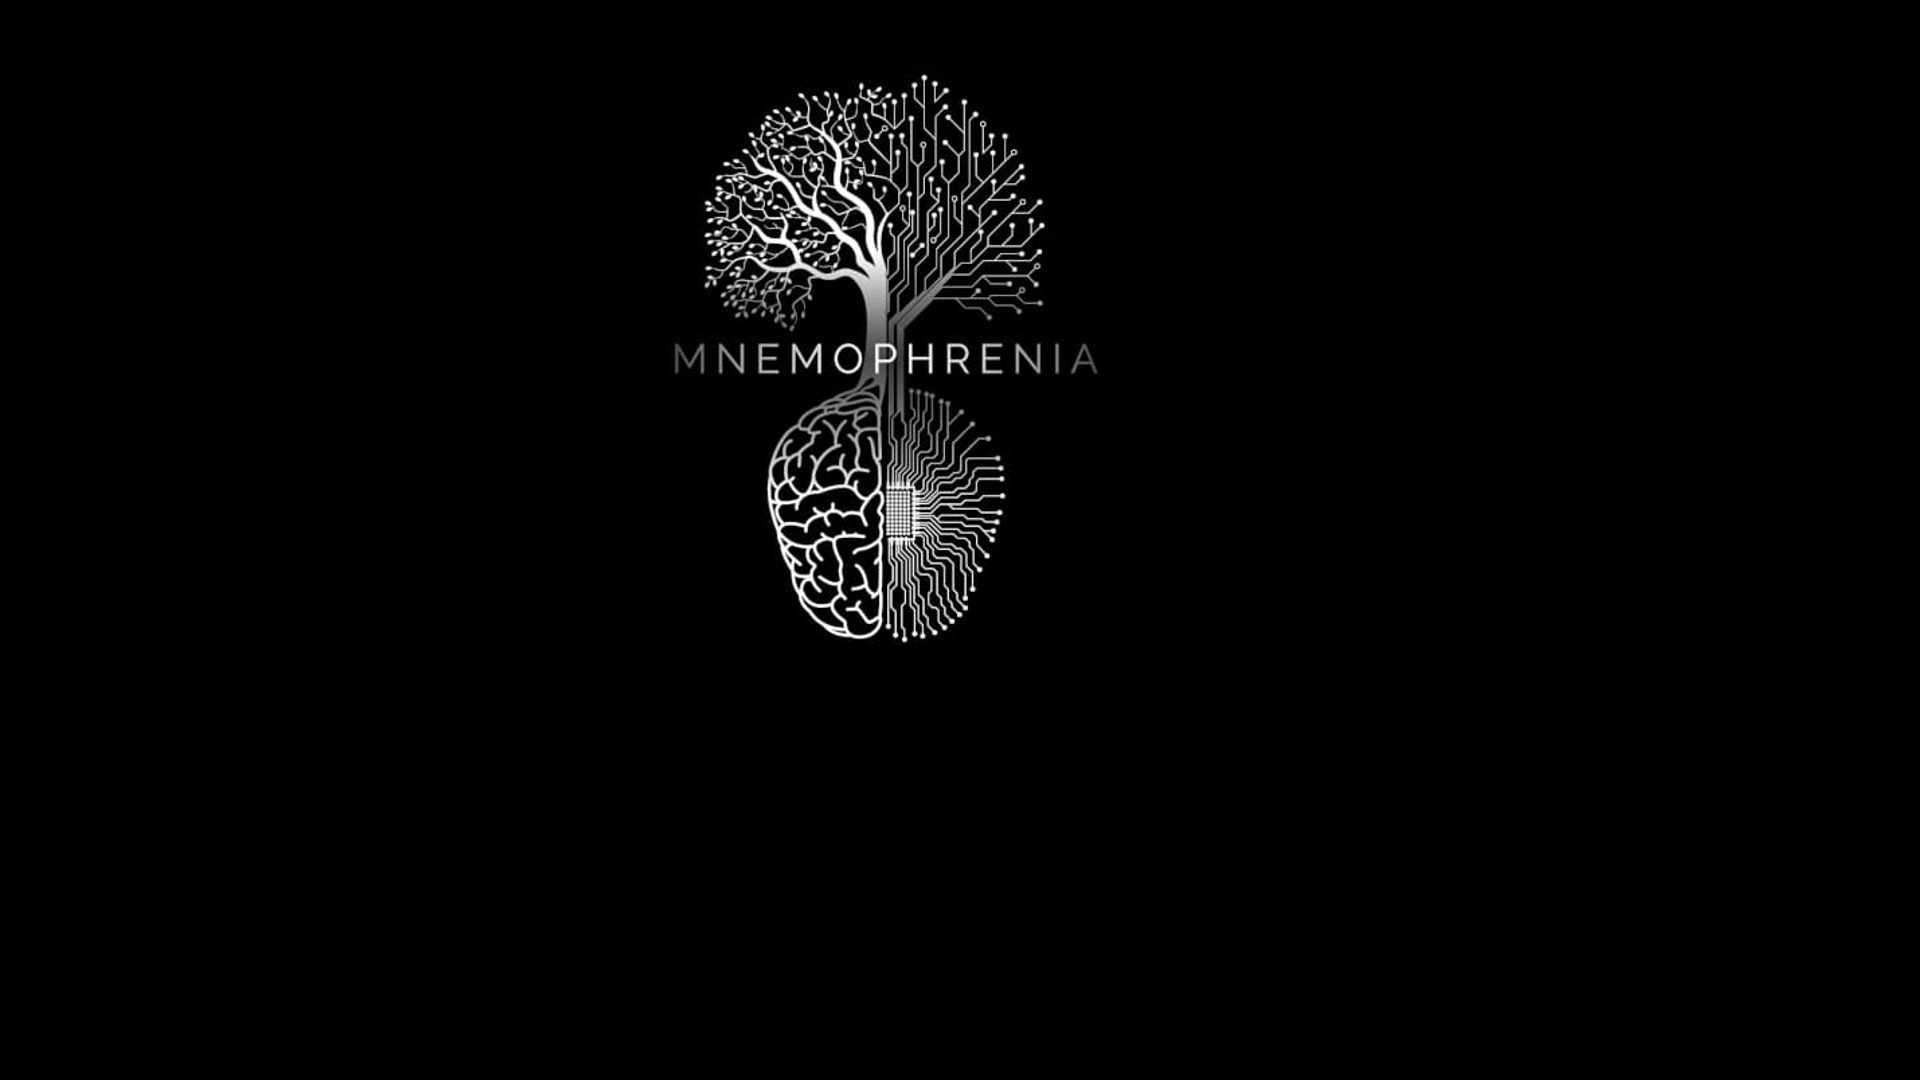 Mnemophrenia background